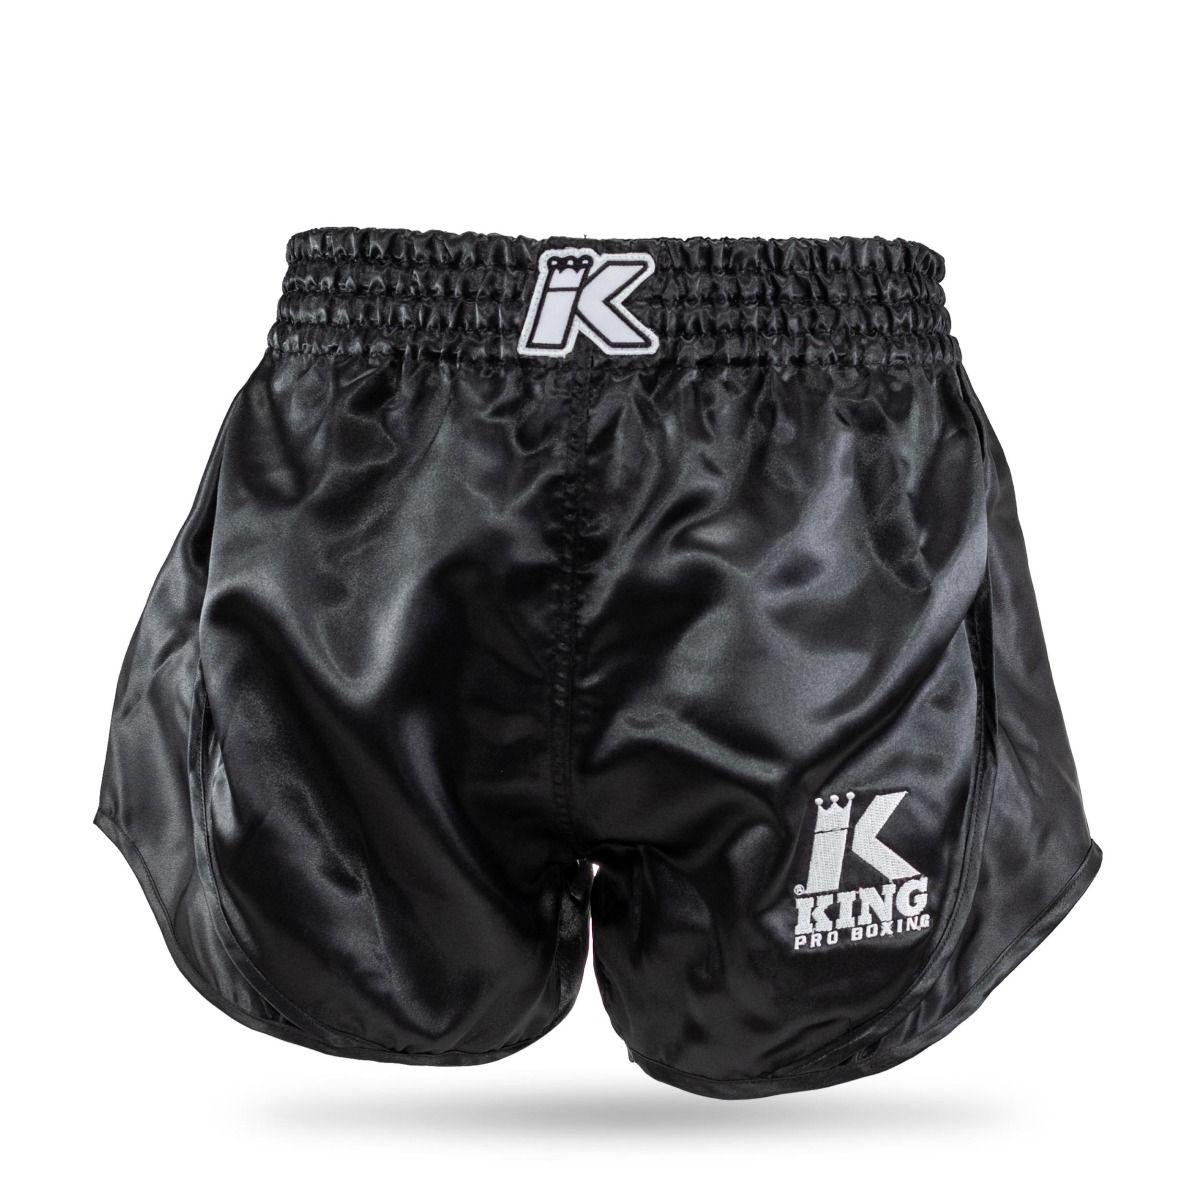 King Pro Boxing-Fightshort-Kickboksbroek-RETRO HYBRID 1-Zwart